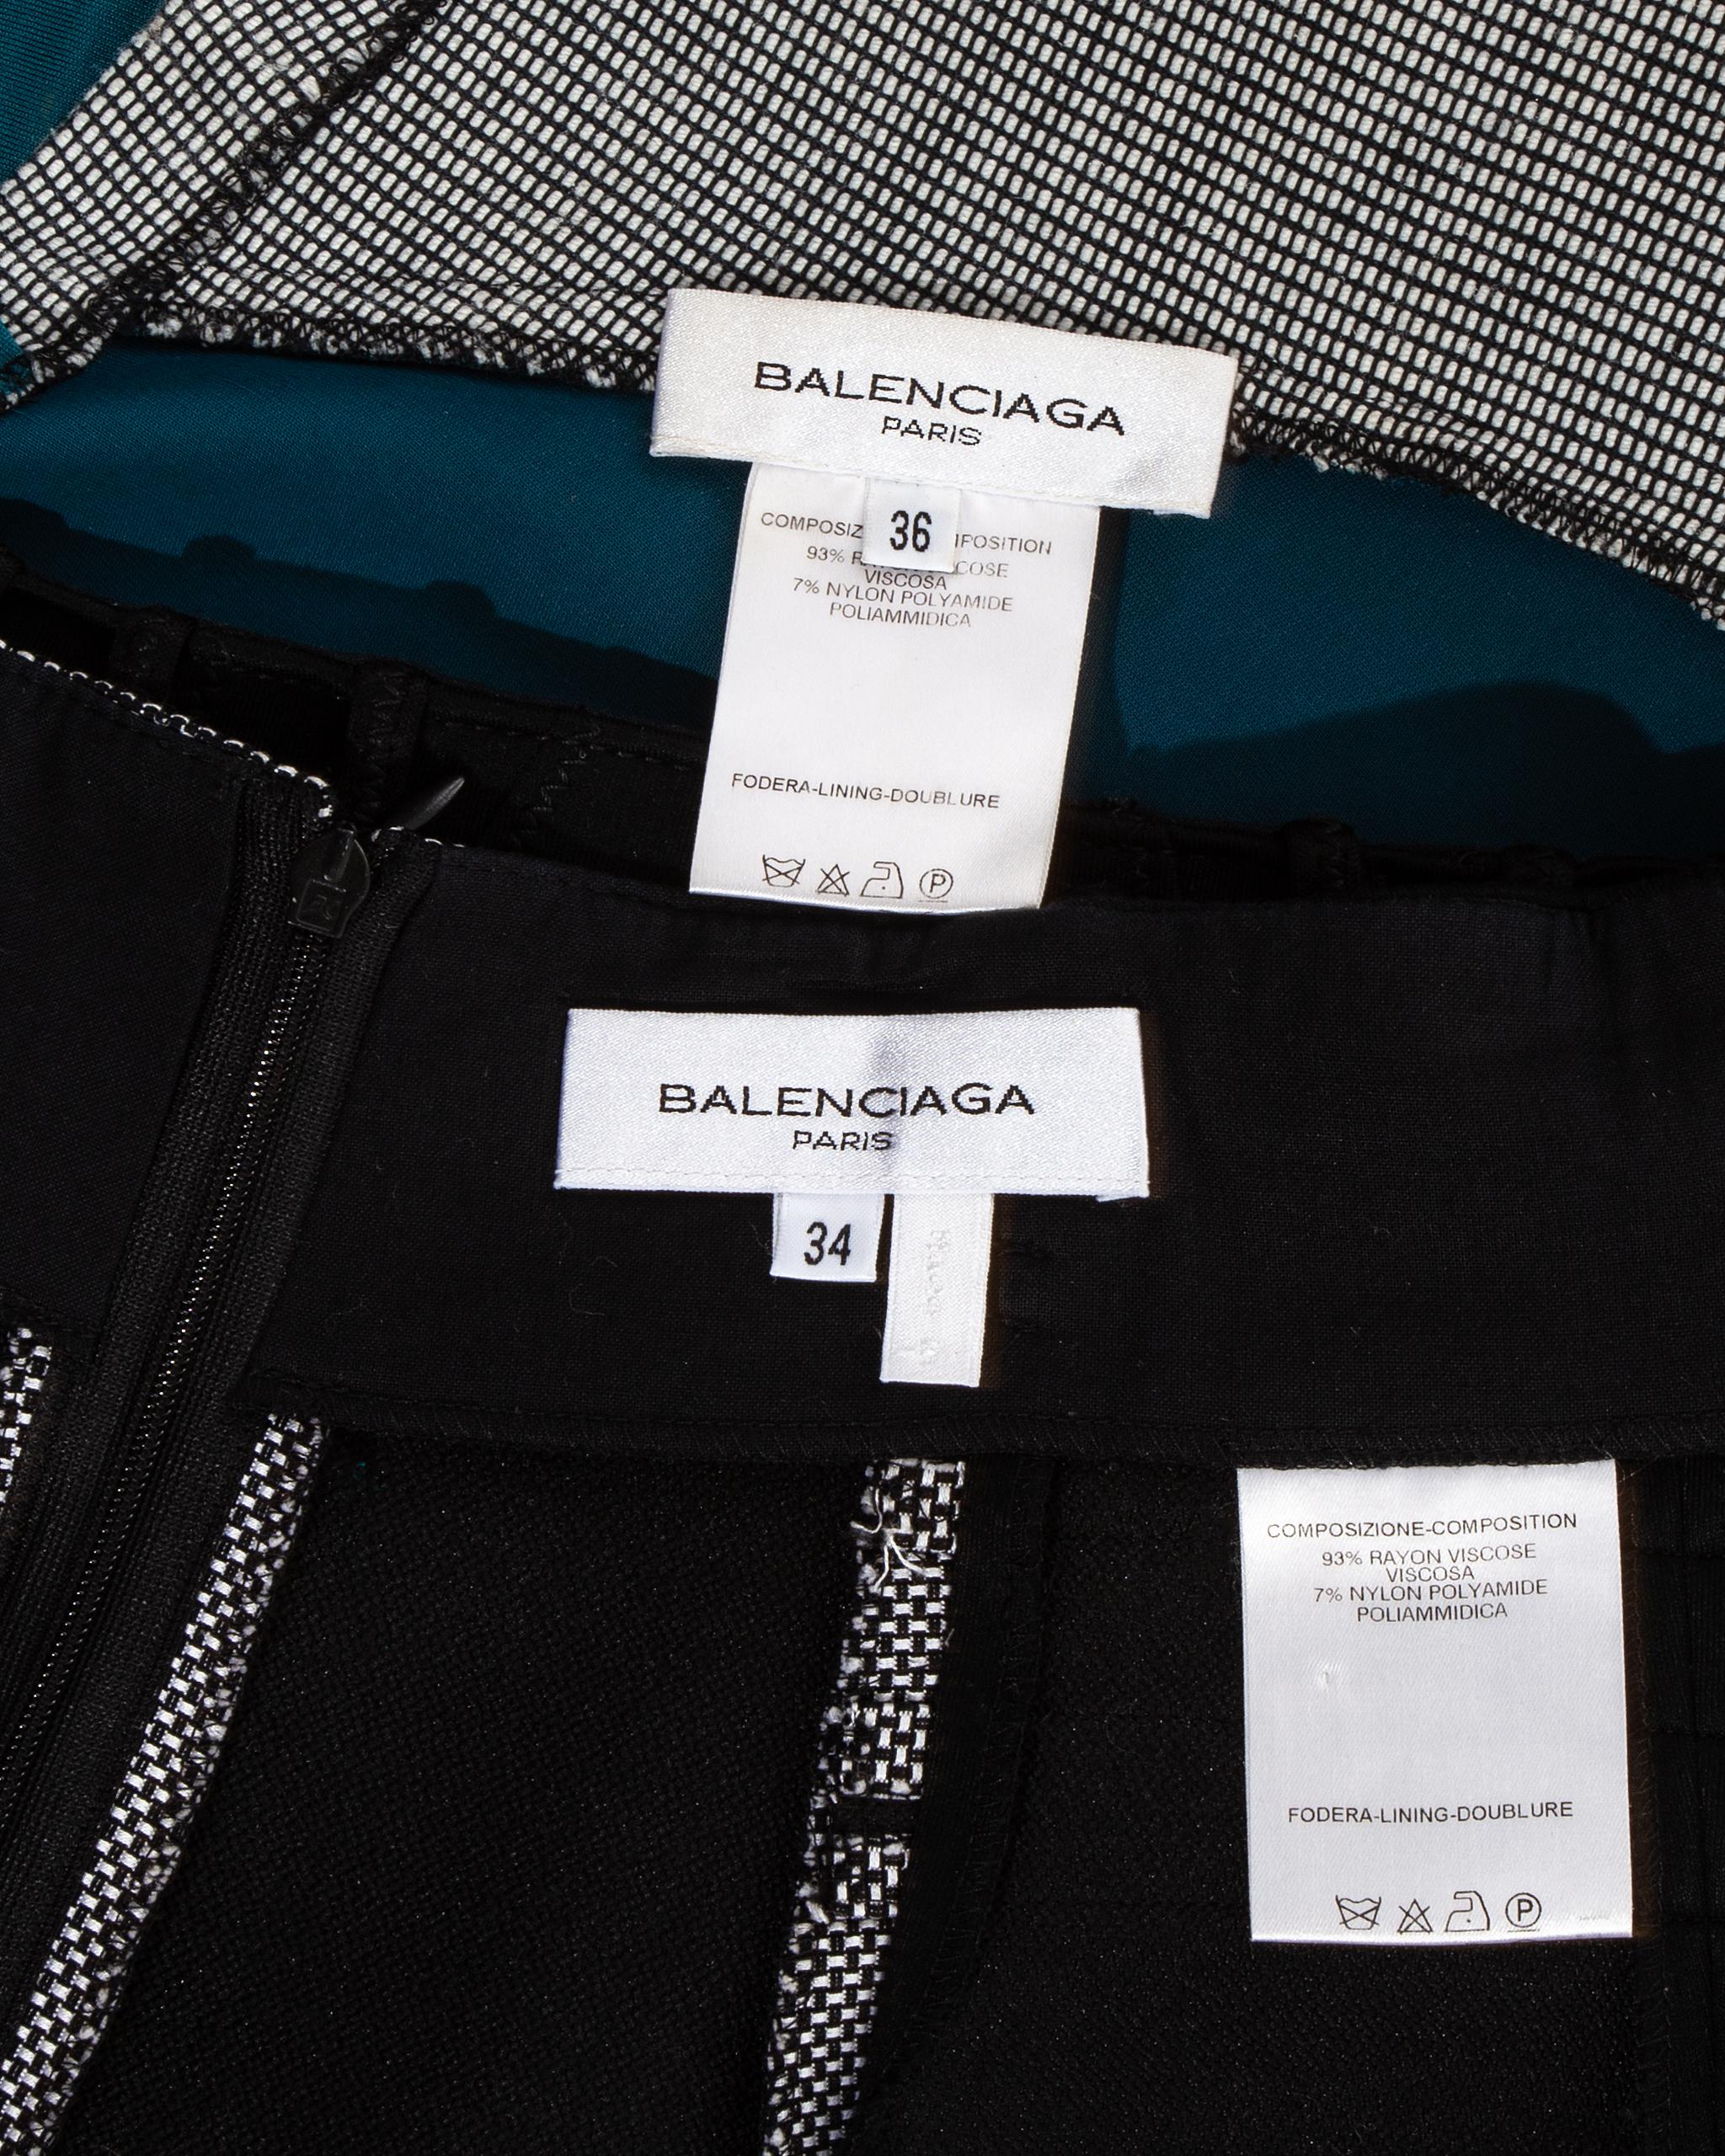 Balenciaga jungle print top and mini skirt ensemble, ss 2003 1